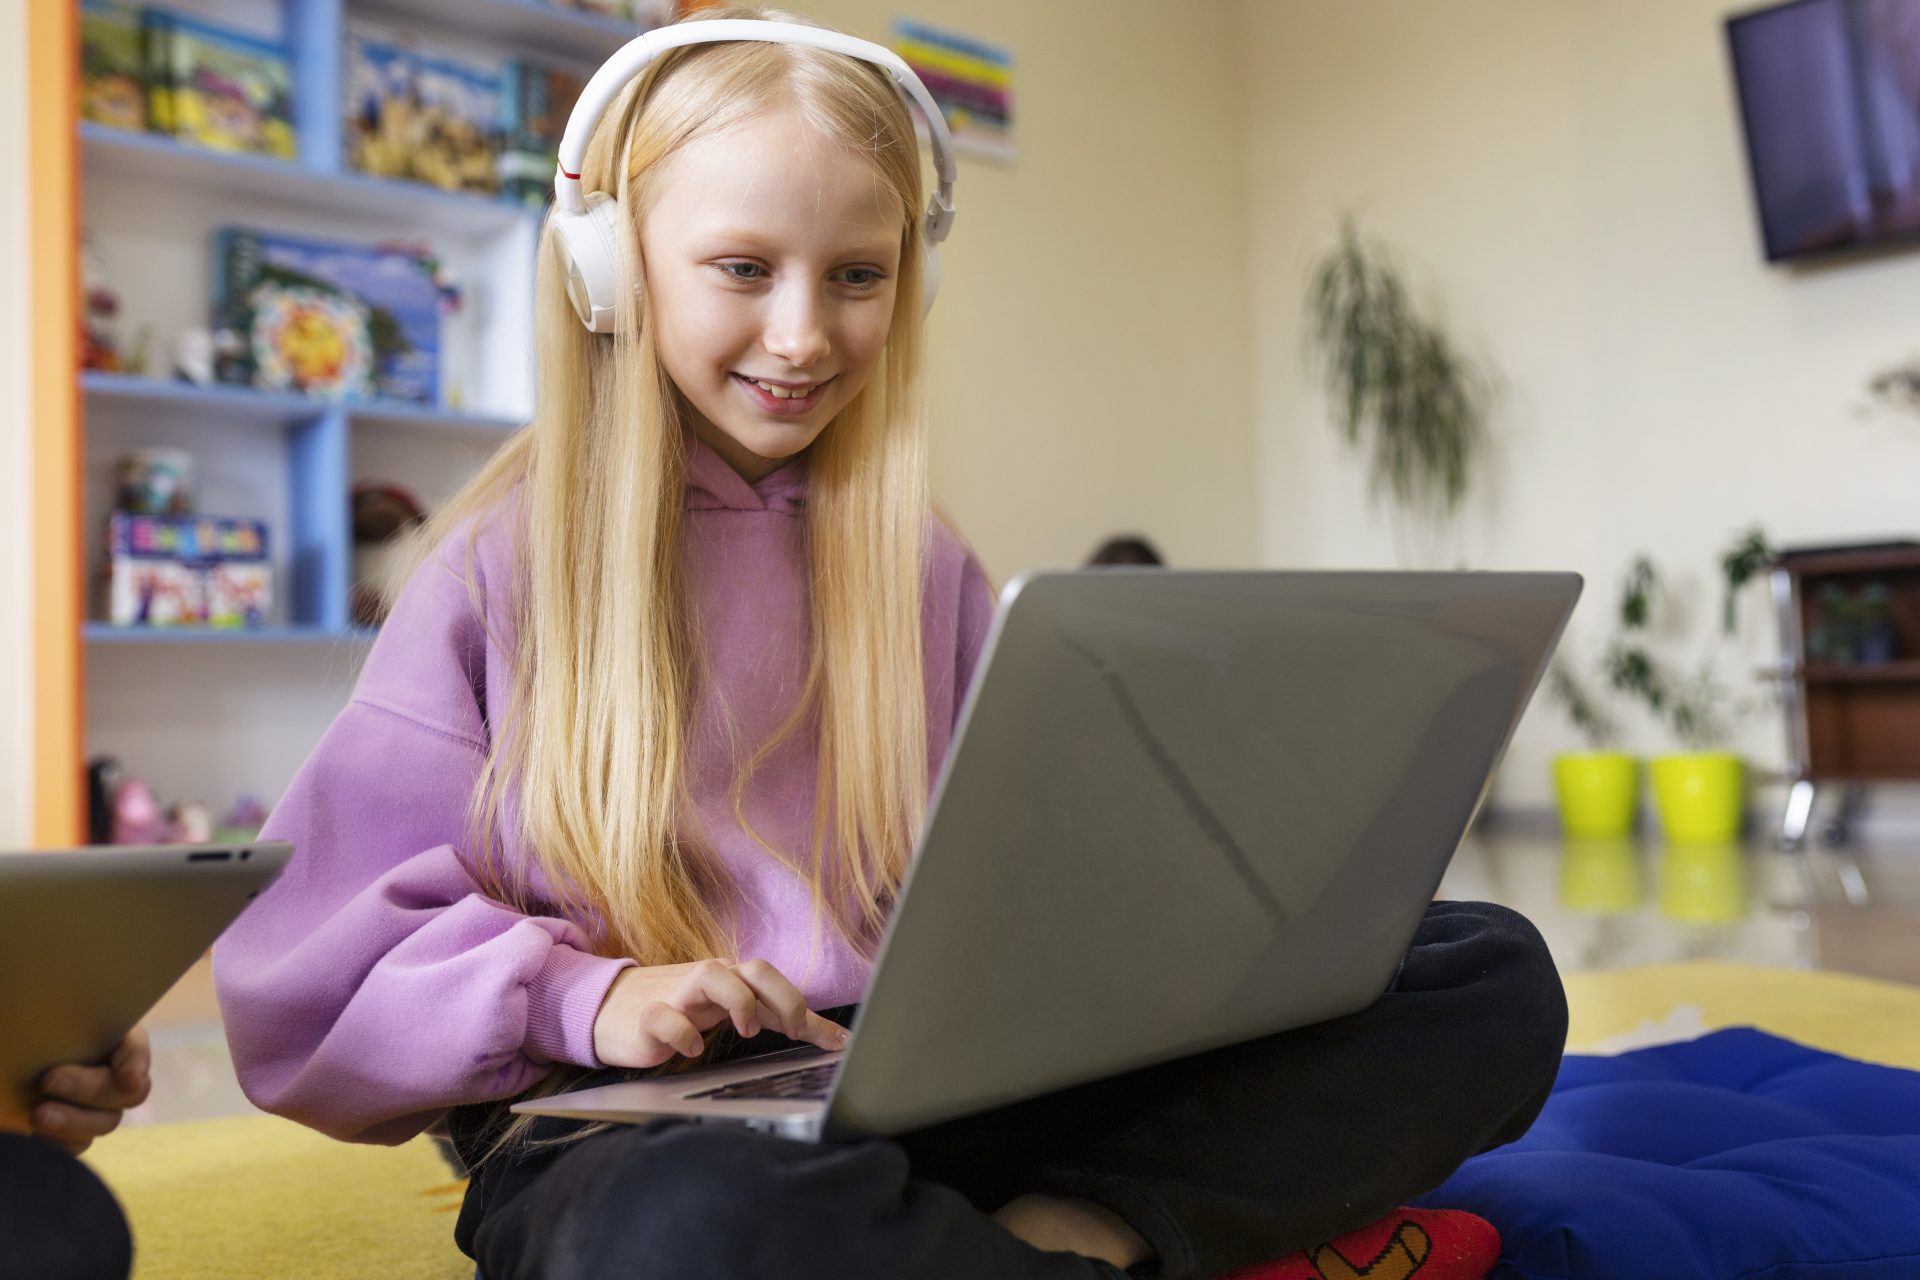 Good Online Schools: Finding Accredited Programs